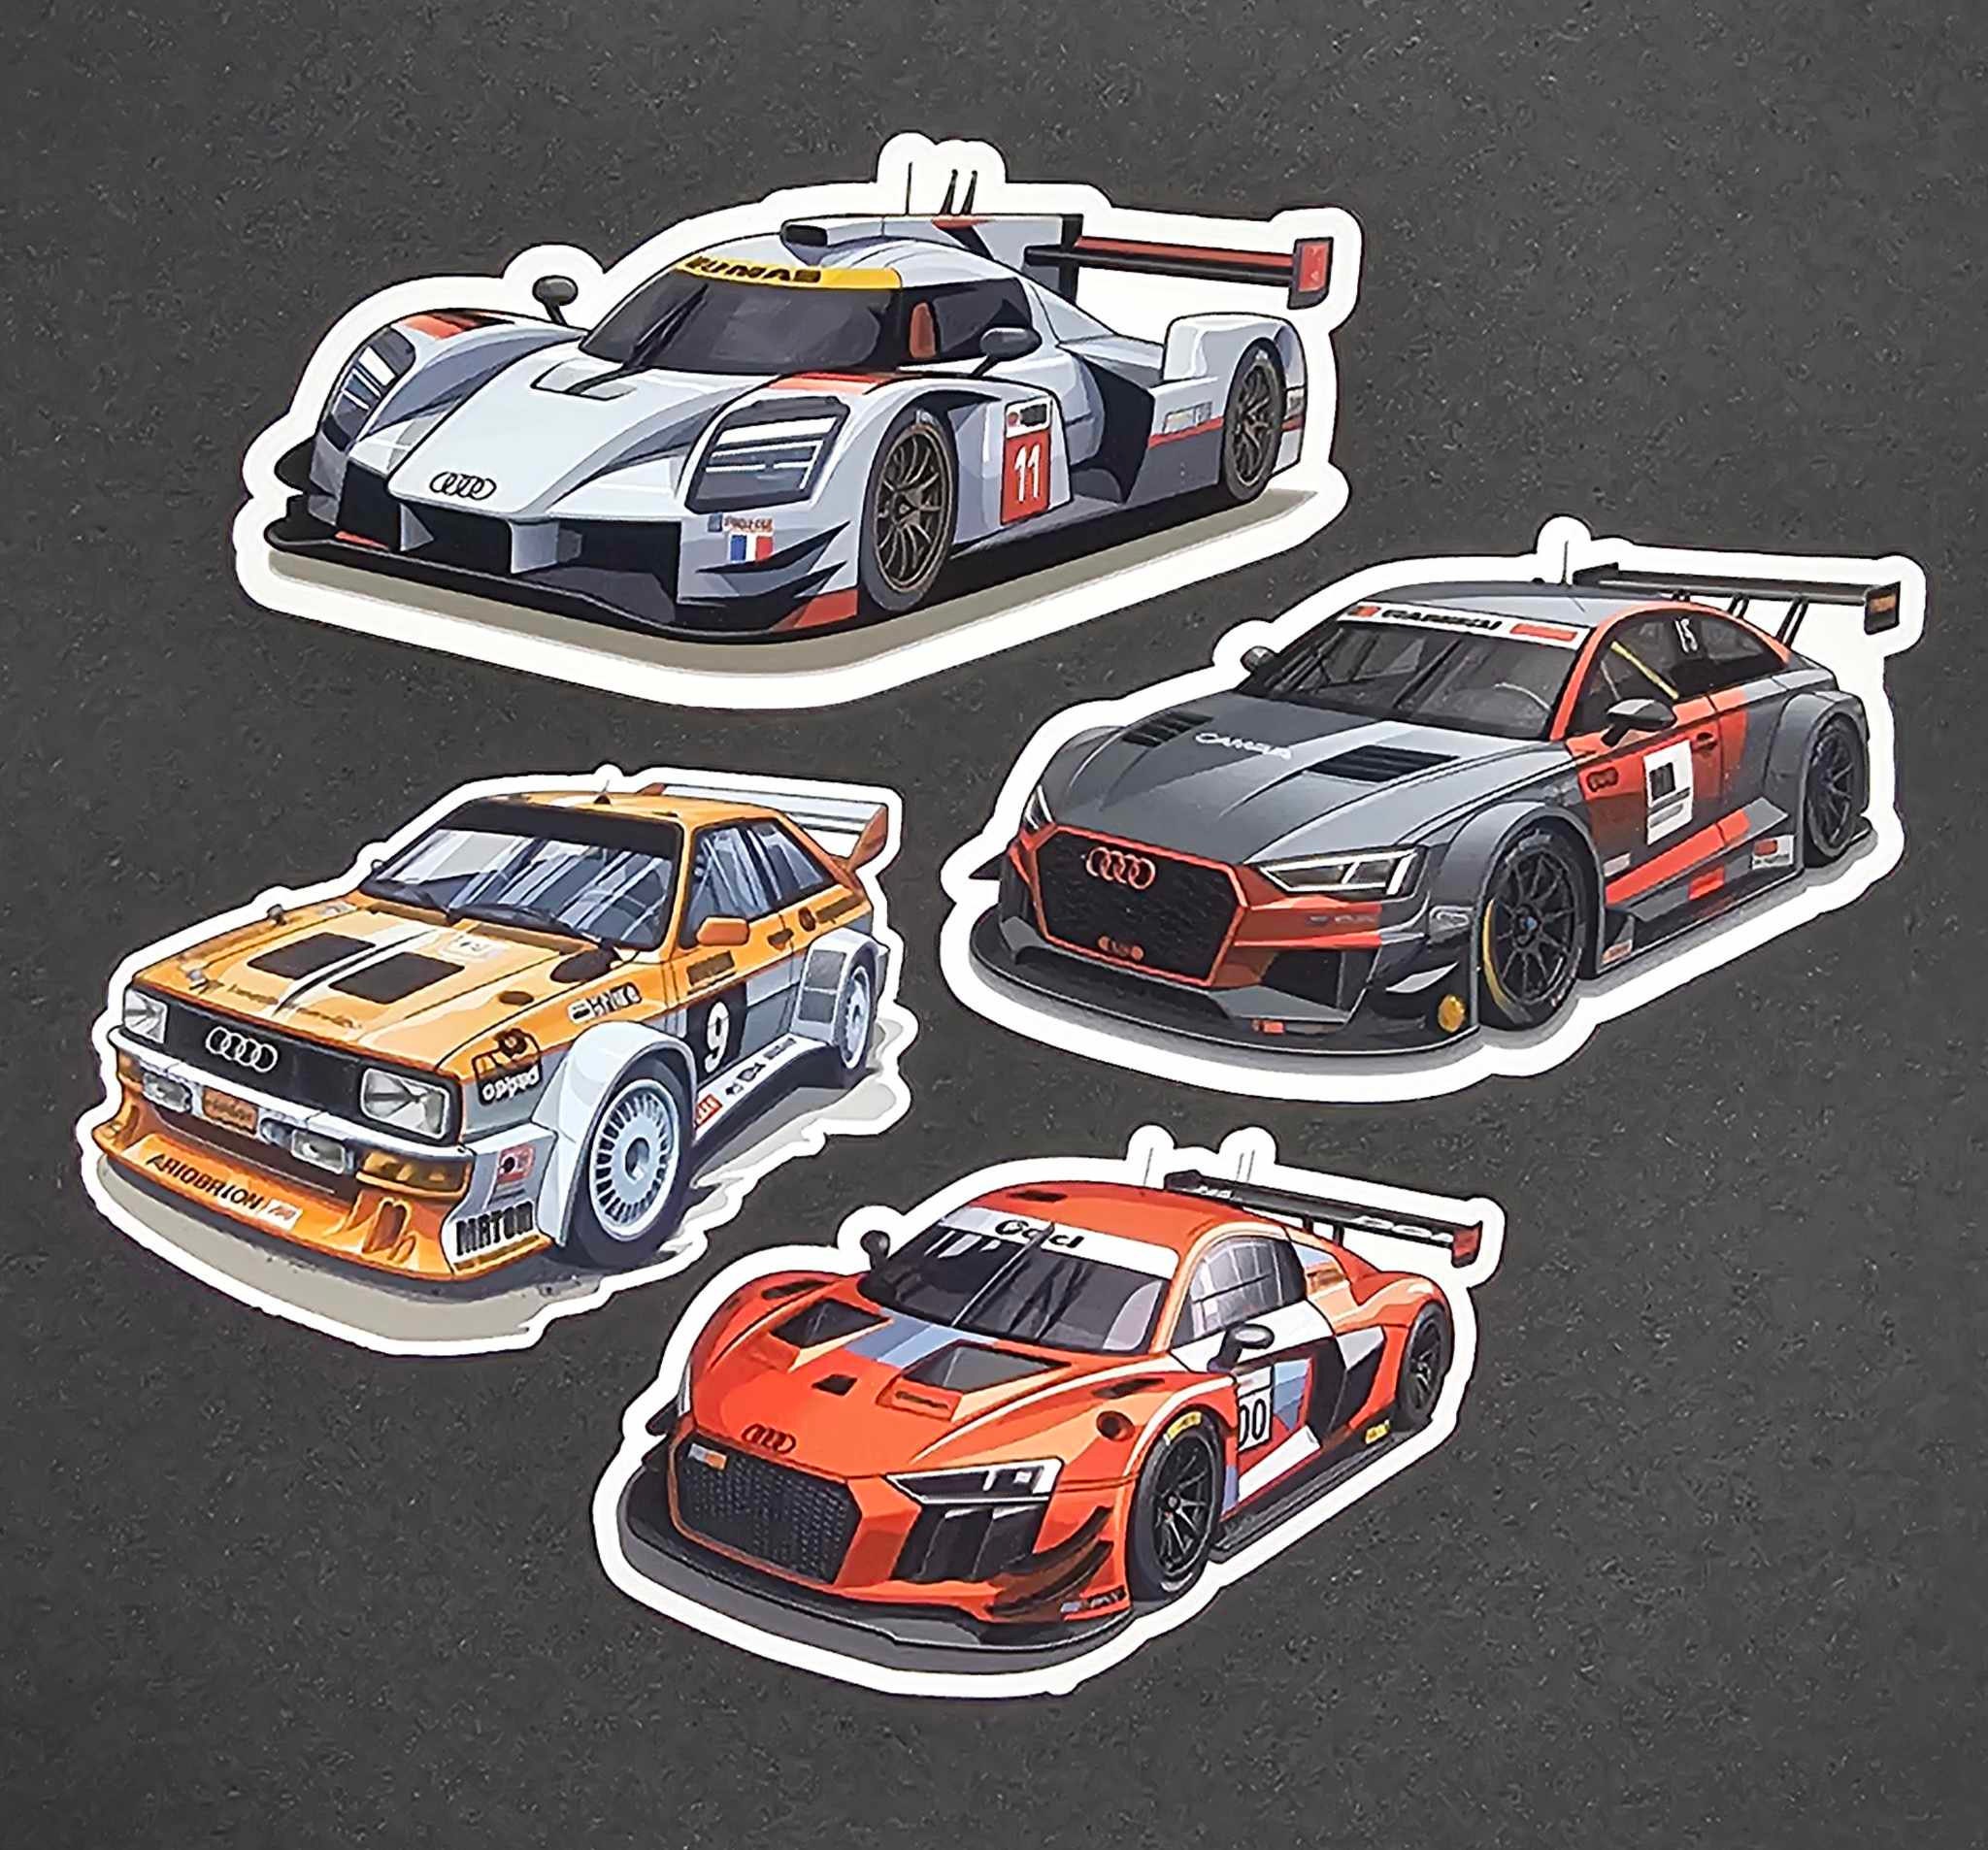 Vinyl Decals Graphic Stickers side Audi sunstrip Germany Motorsport 2022